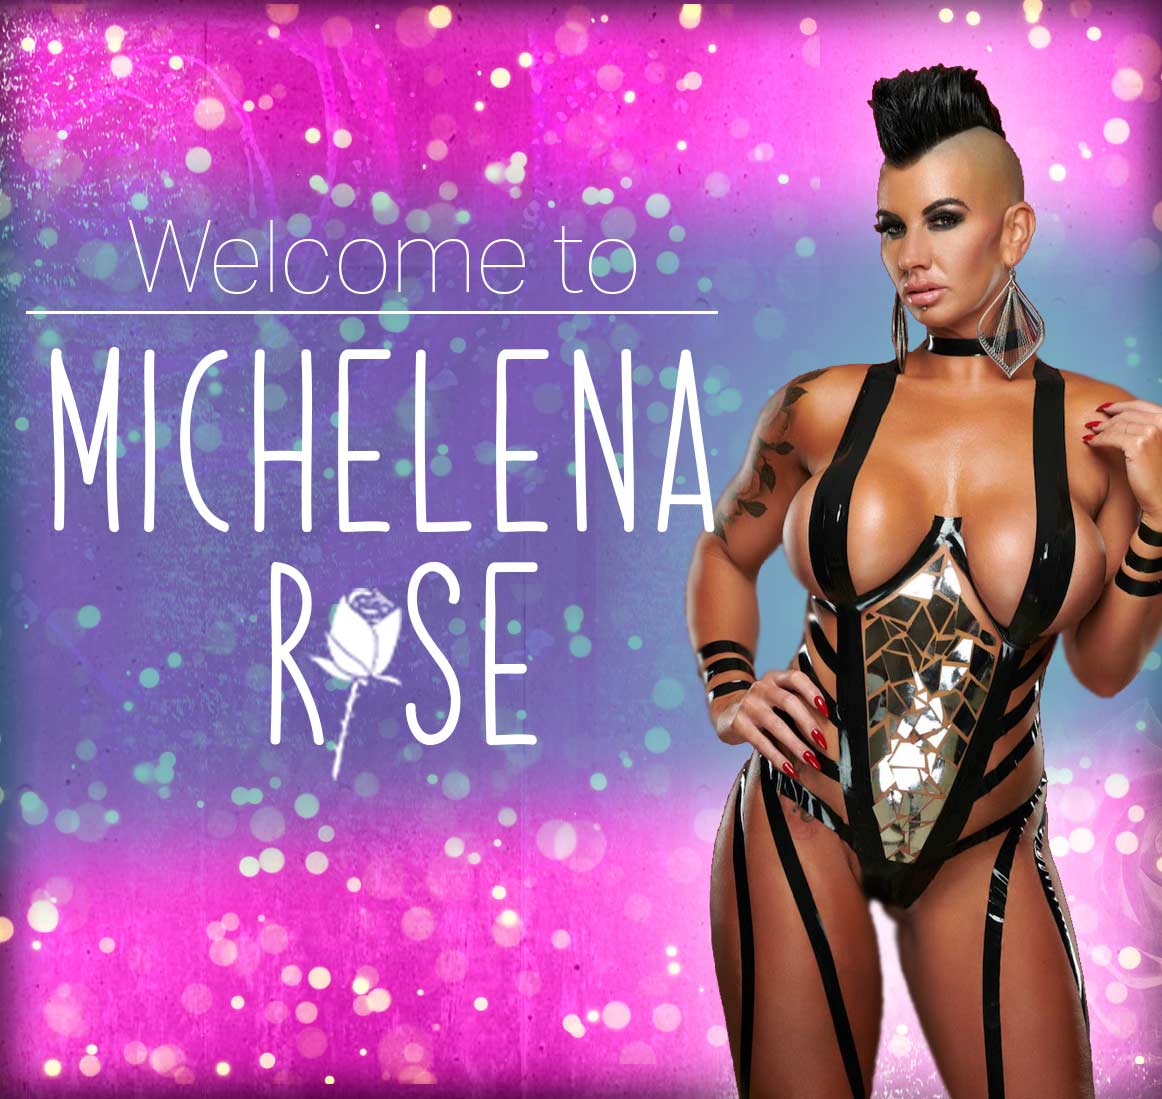 Michelena Rose Model Only Fans Webpage